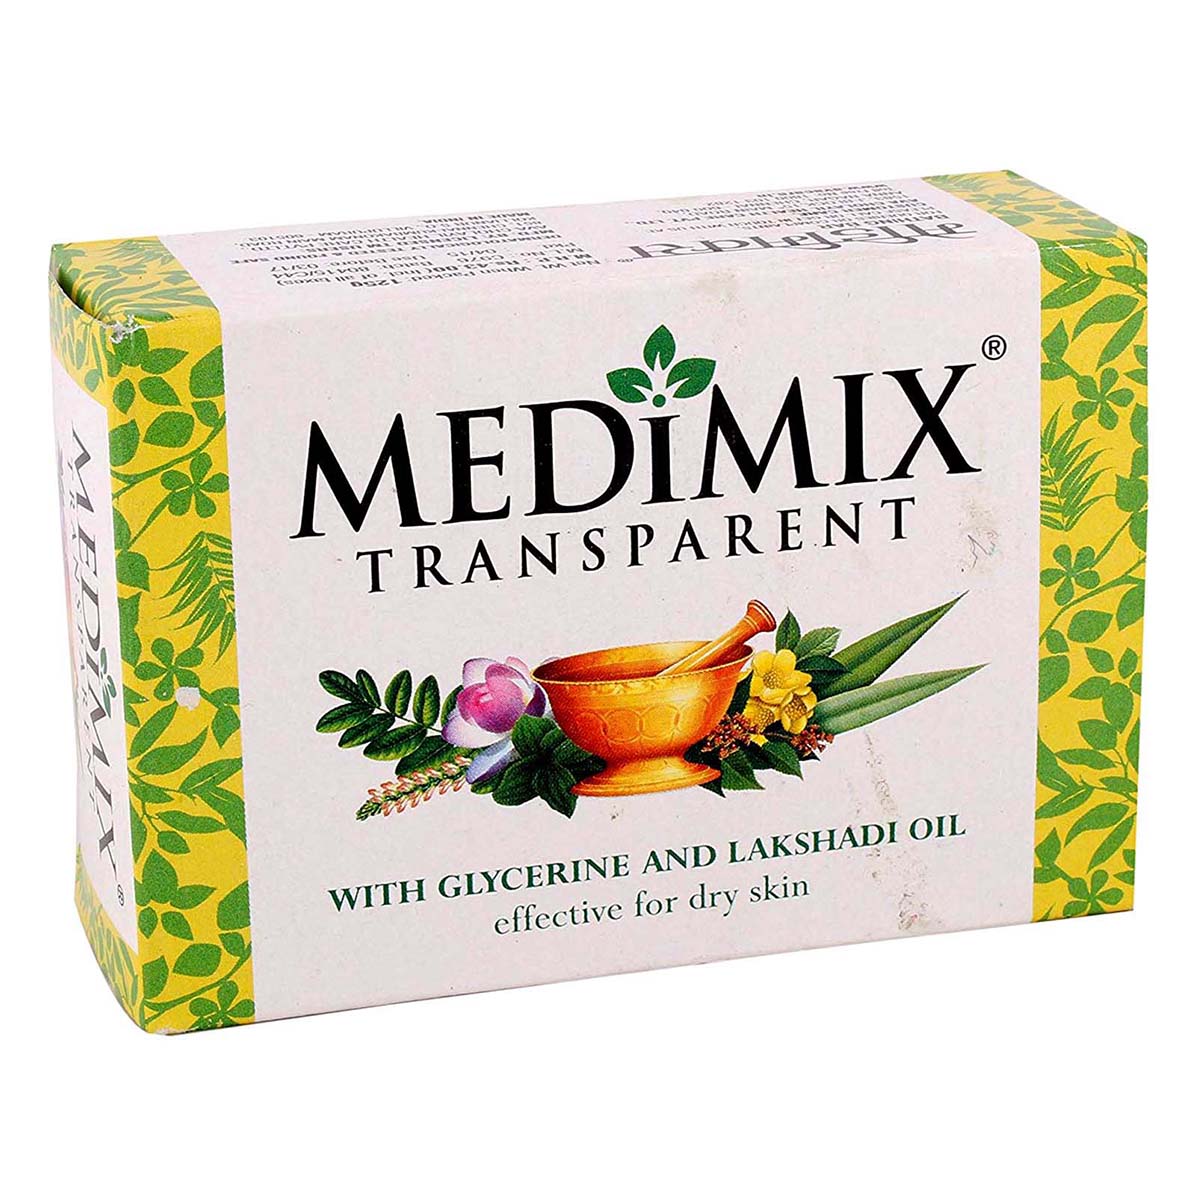 Buy Medimix Ayurvedic Transparent Soap with Glycerine and Lakshadi Oil - 125 gm